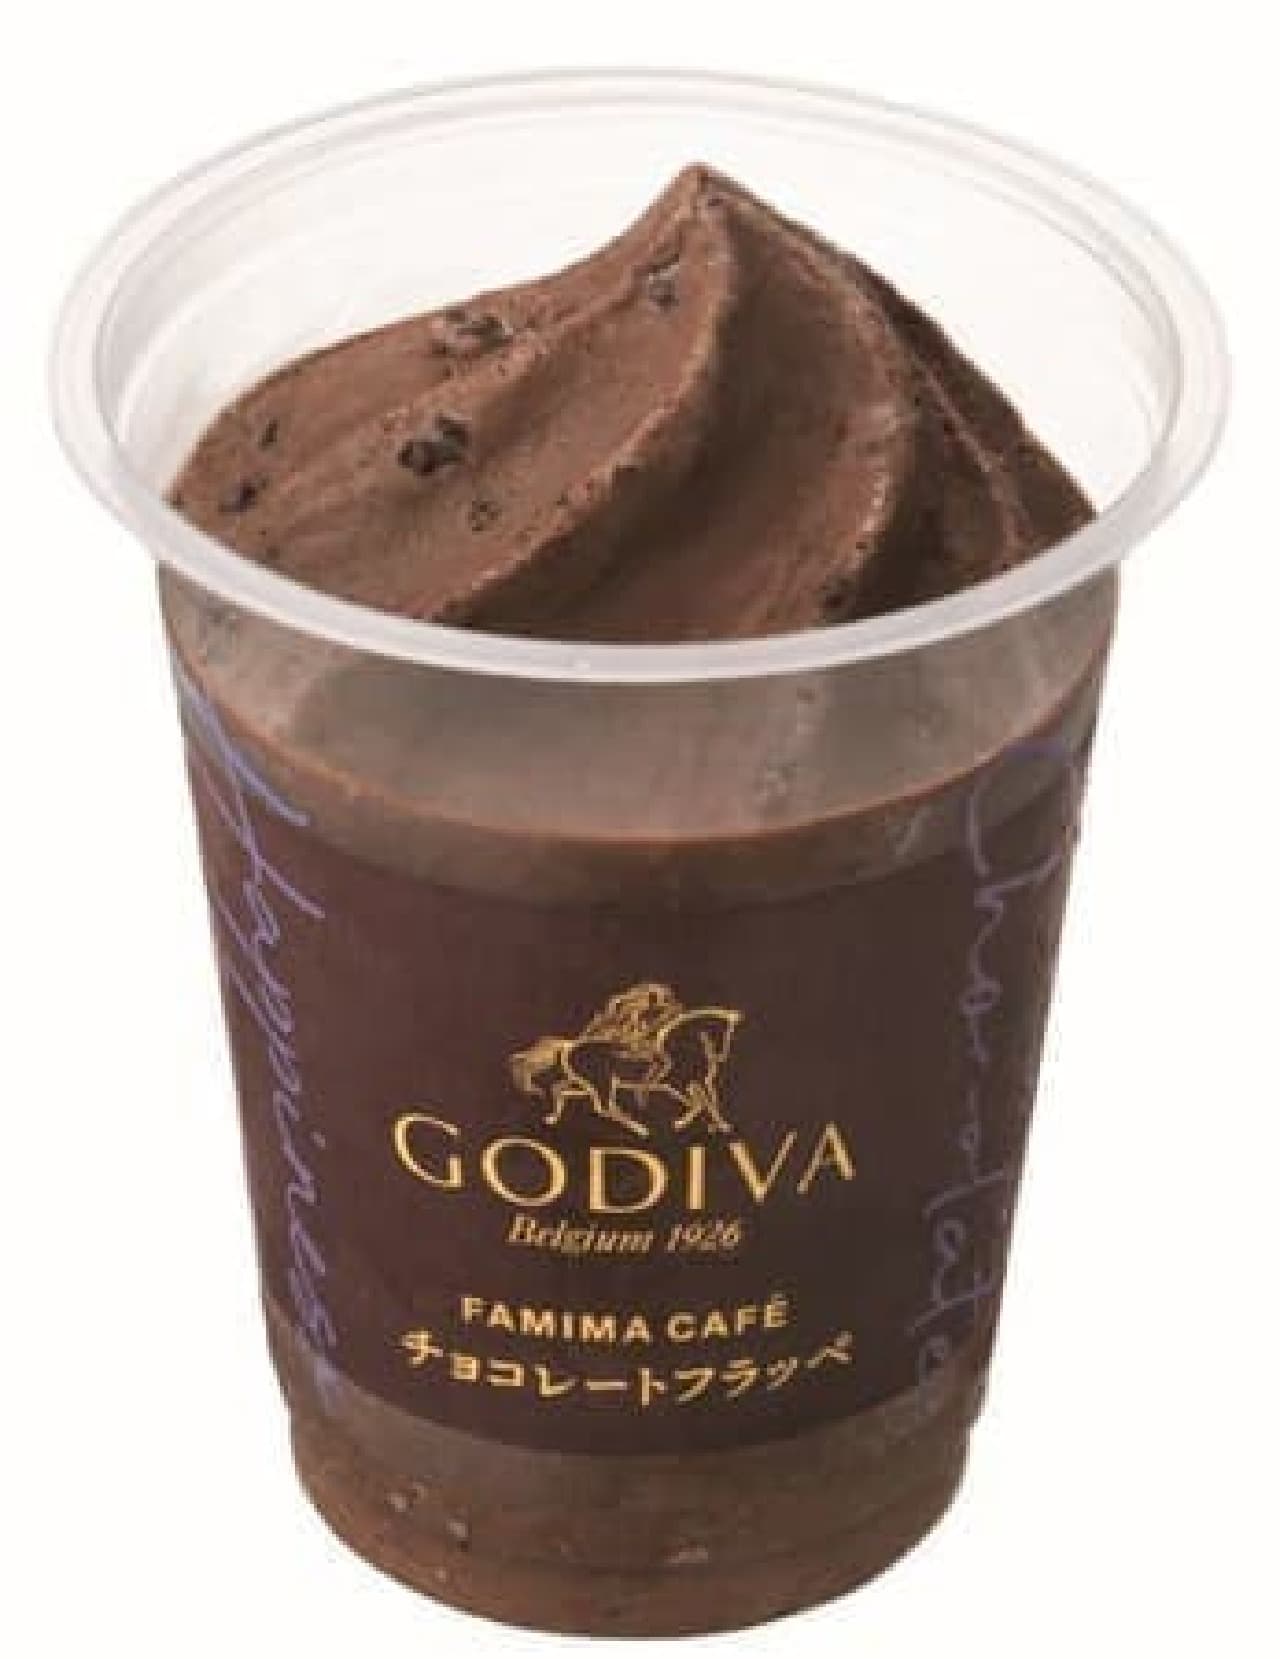 FamilyMart "Chocolate Frappe Supervised by Godiva"